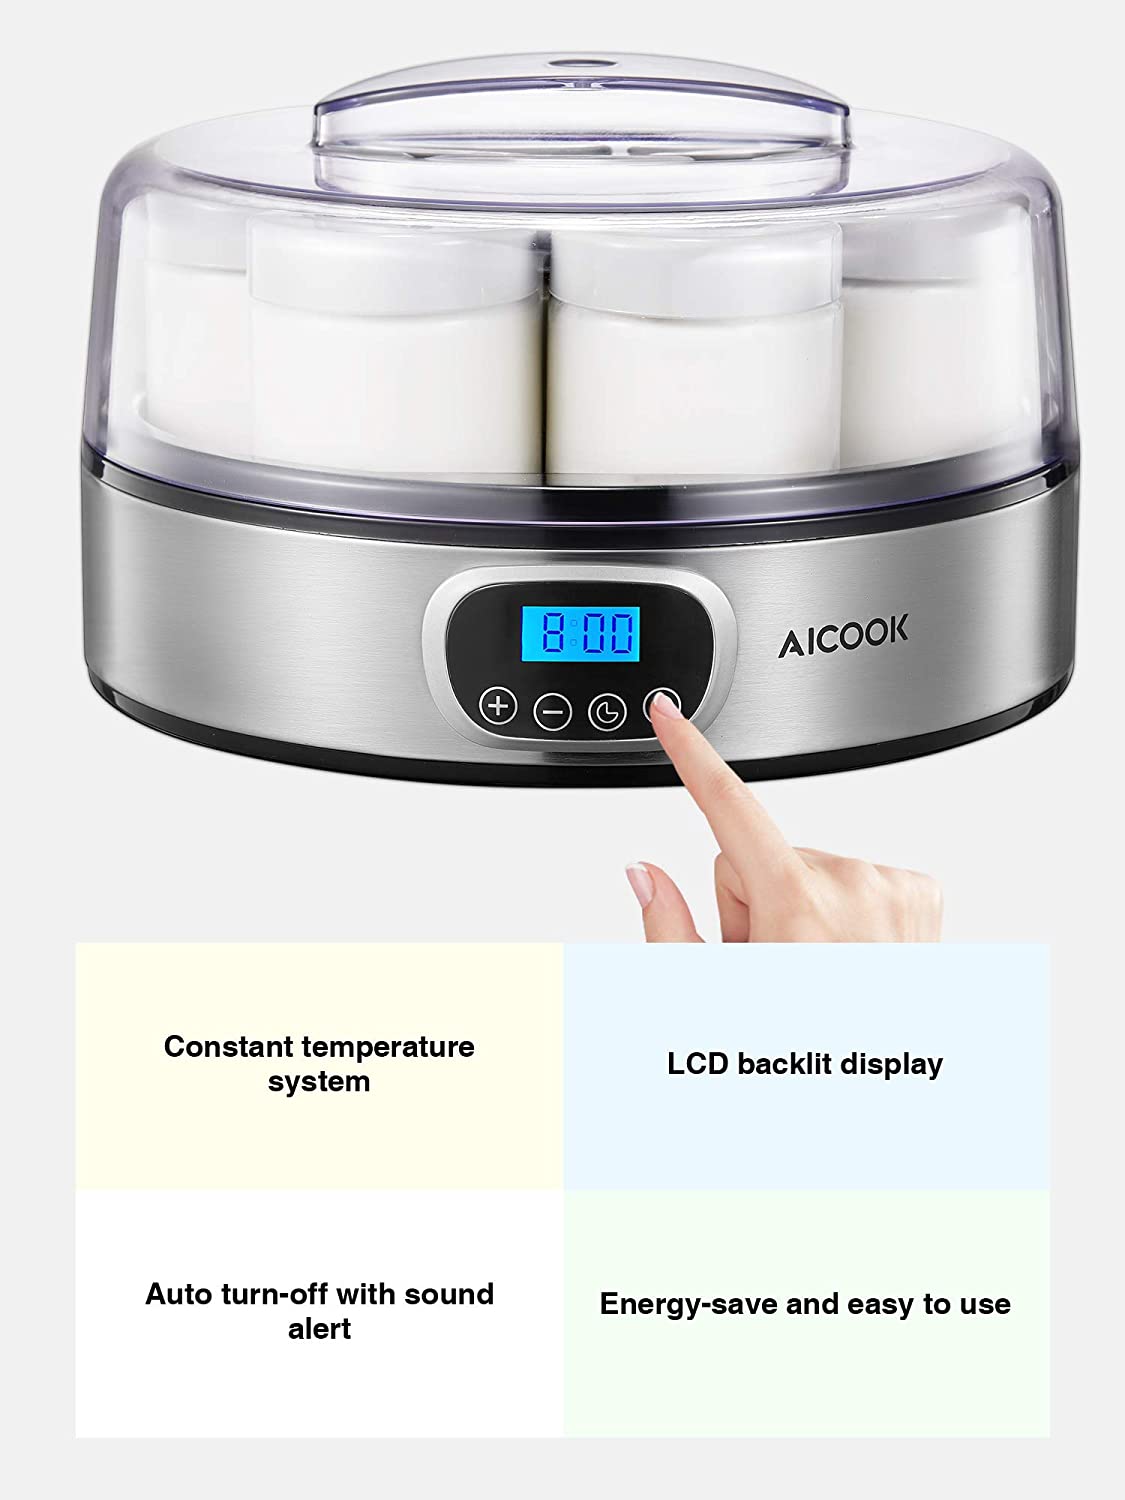 AICOOK | Yogurt Maker, Automatic Digital Yogurt Maker Machine with Timer Control & LCD Display, Stainless Steel Body, Smart Design